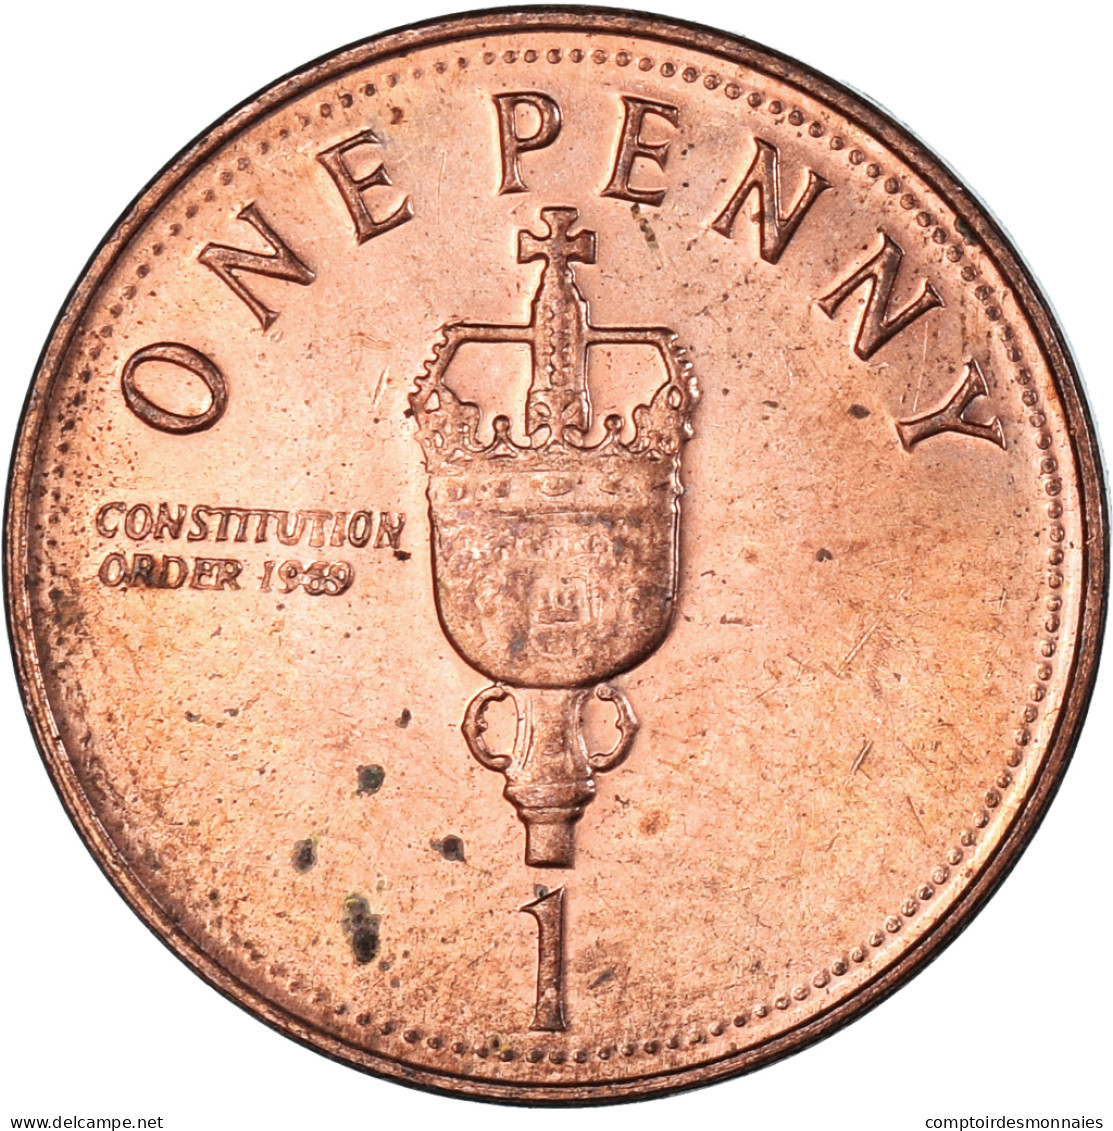 Monnaie, Gibraltar, Penny, 2006 - Gibraltar